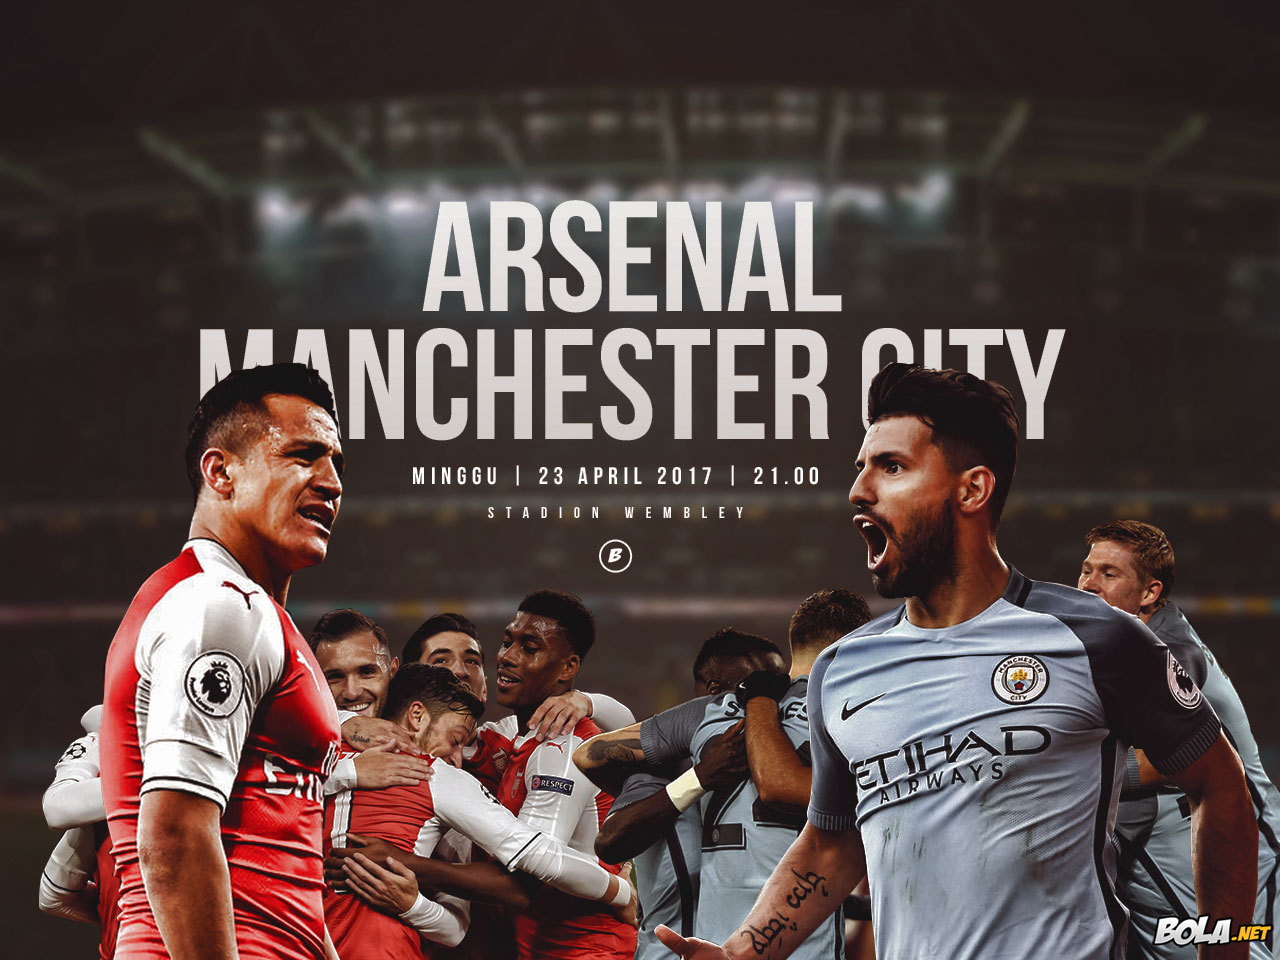 Deskripsi : Wallpaper Arsenal Vs Manchester City, size: 1280x960